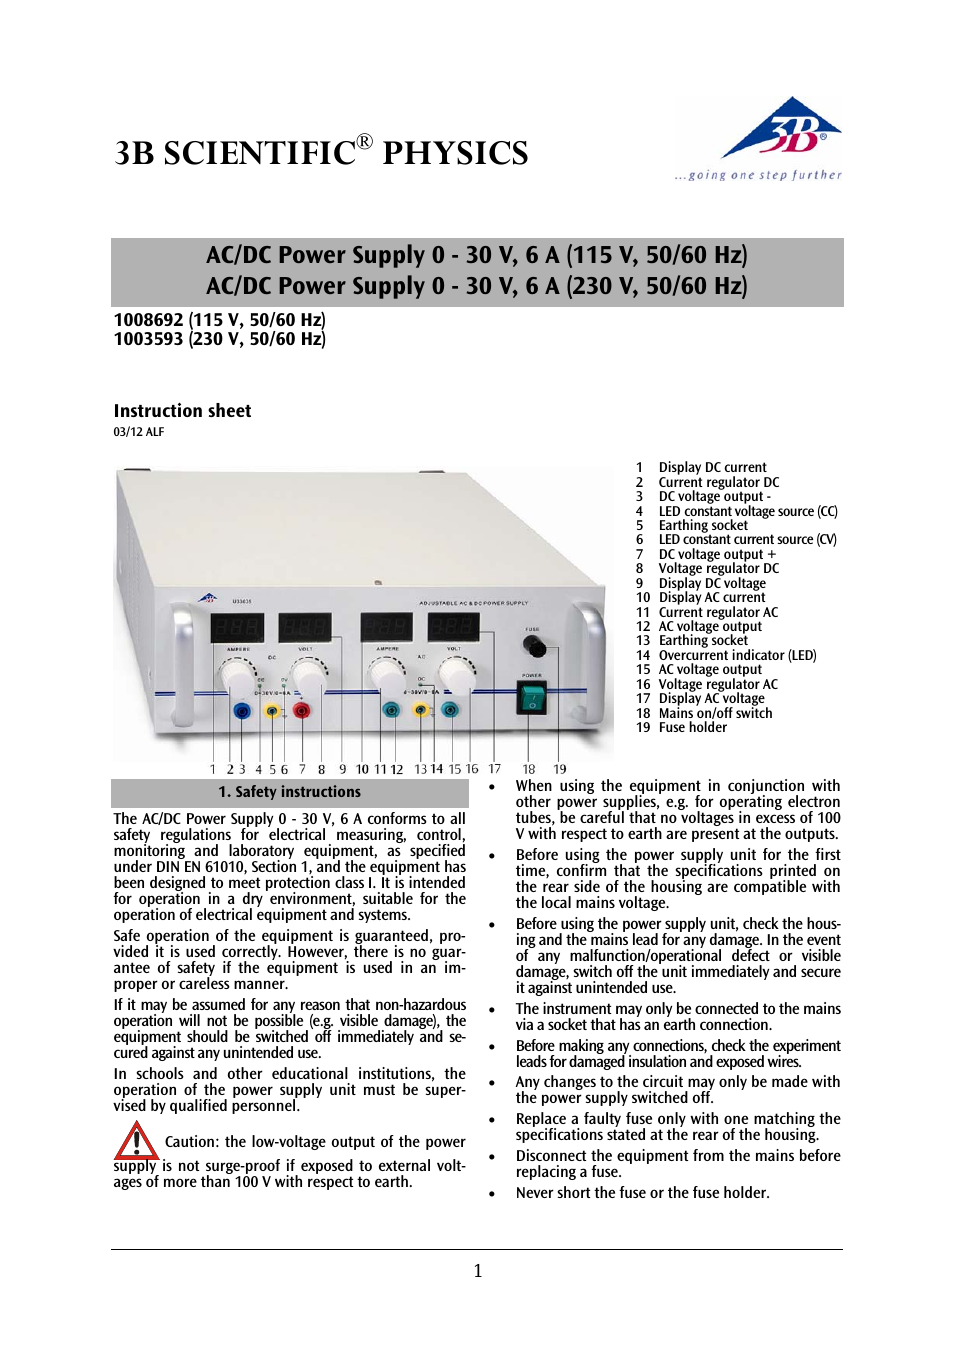 AC__DC Power Supply 0-30 V, 0-6 A (115 V, 50__60 Hz)